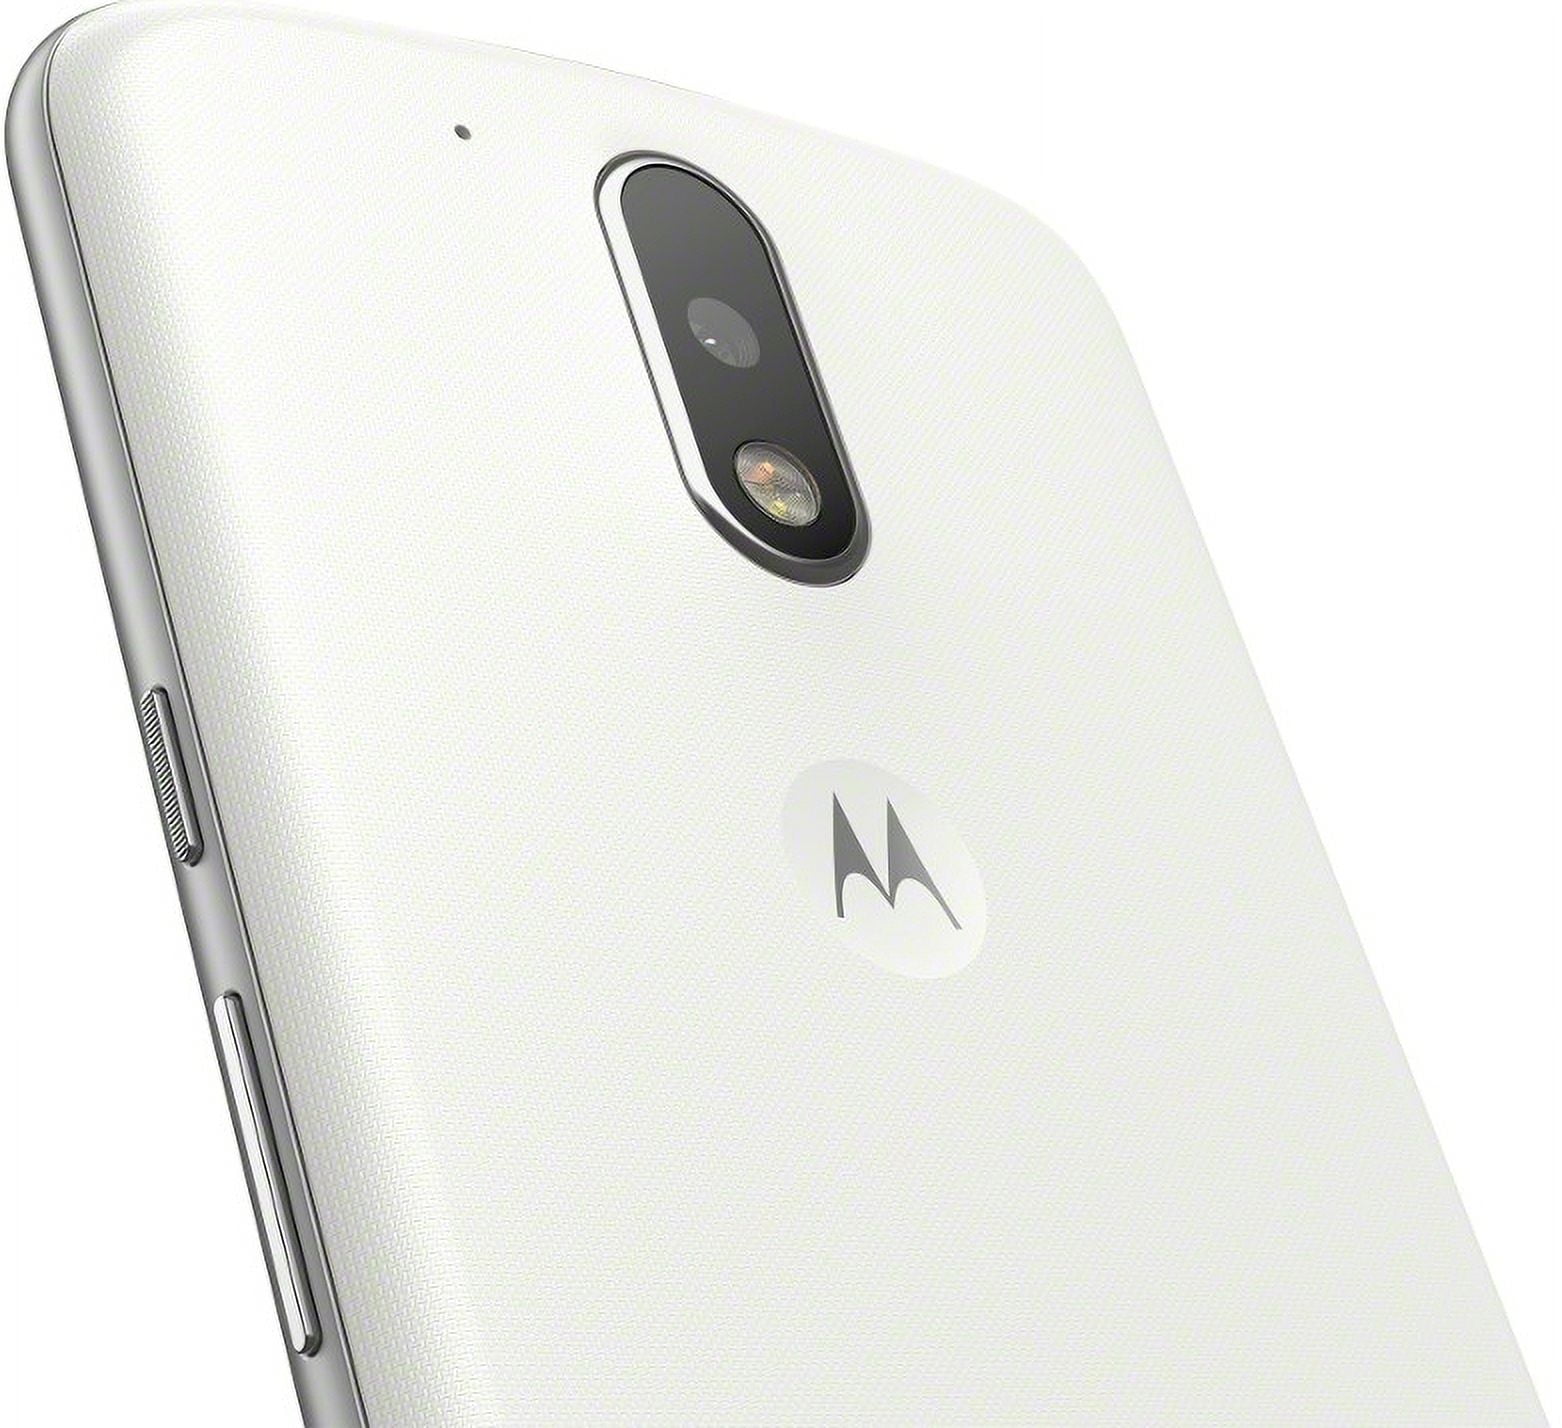 Motorola Moto G4 Plus(XT1641)32GB Black GSM Unlocked Android Fair